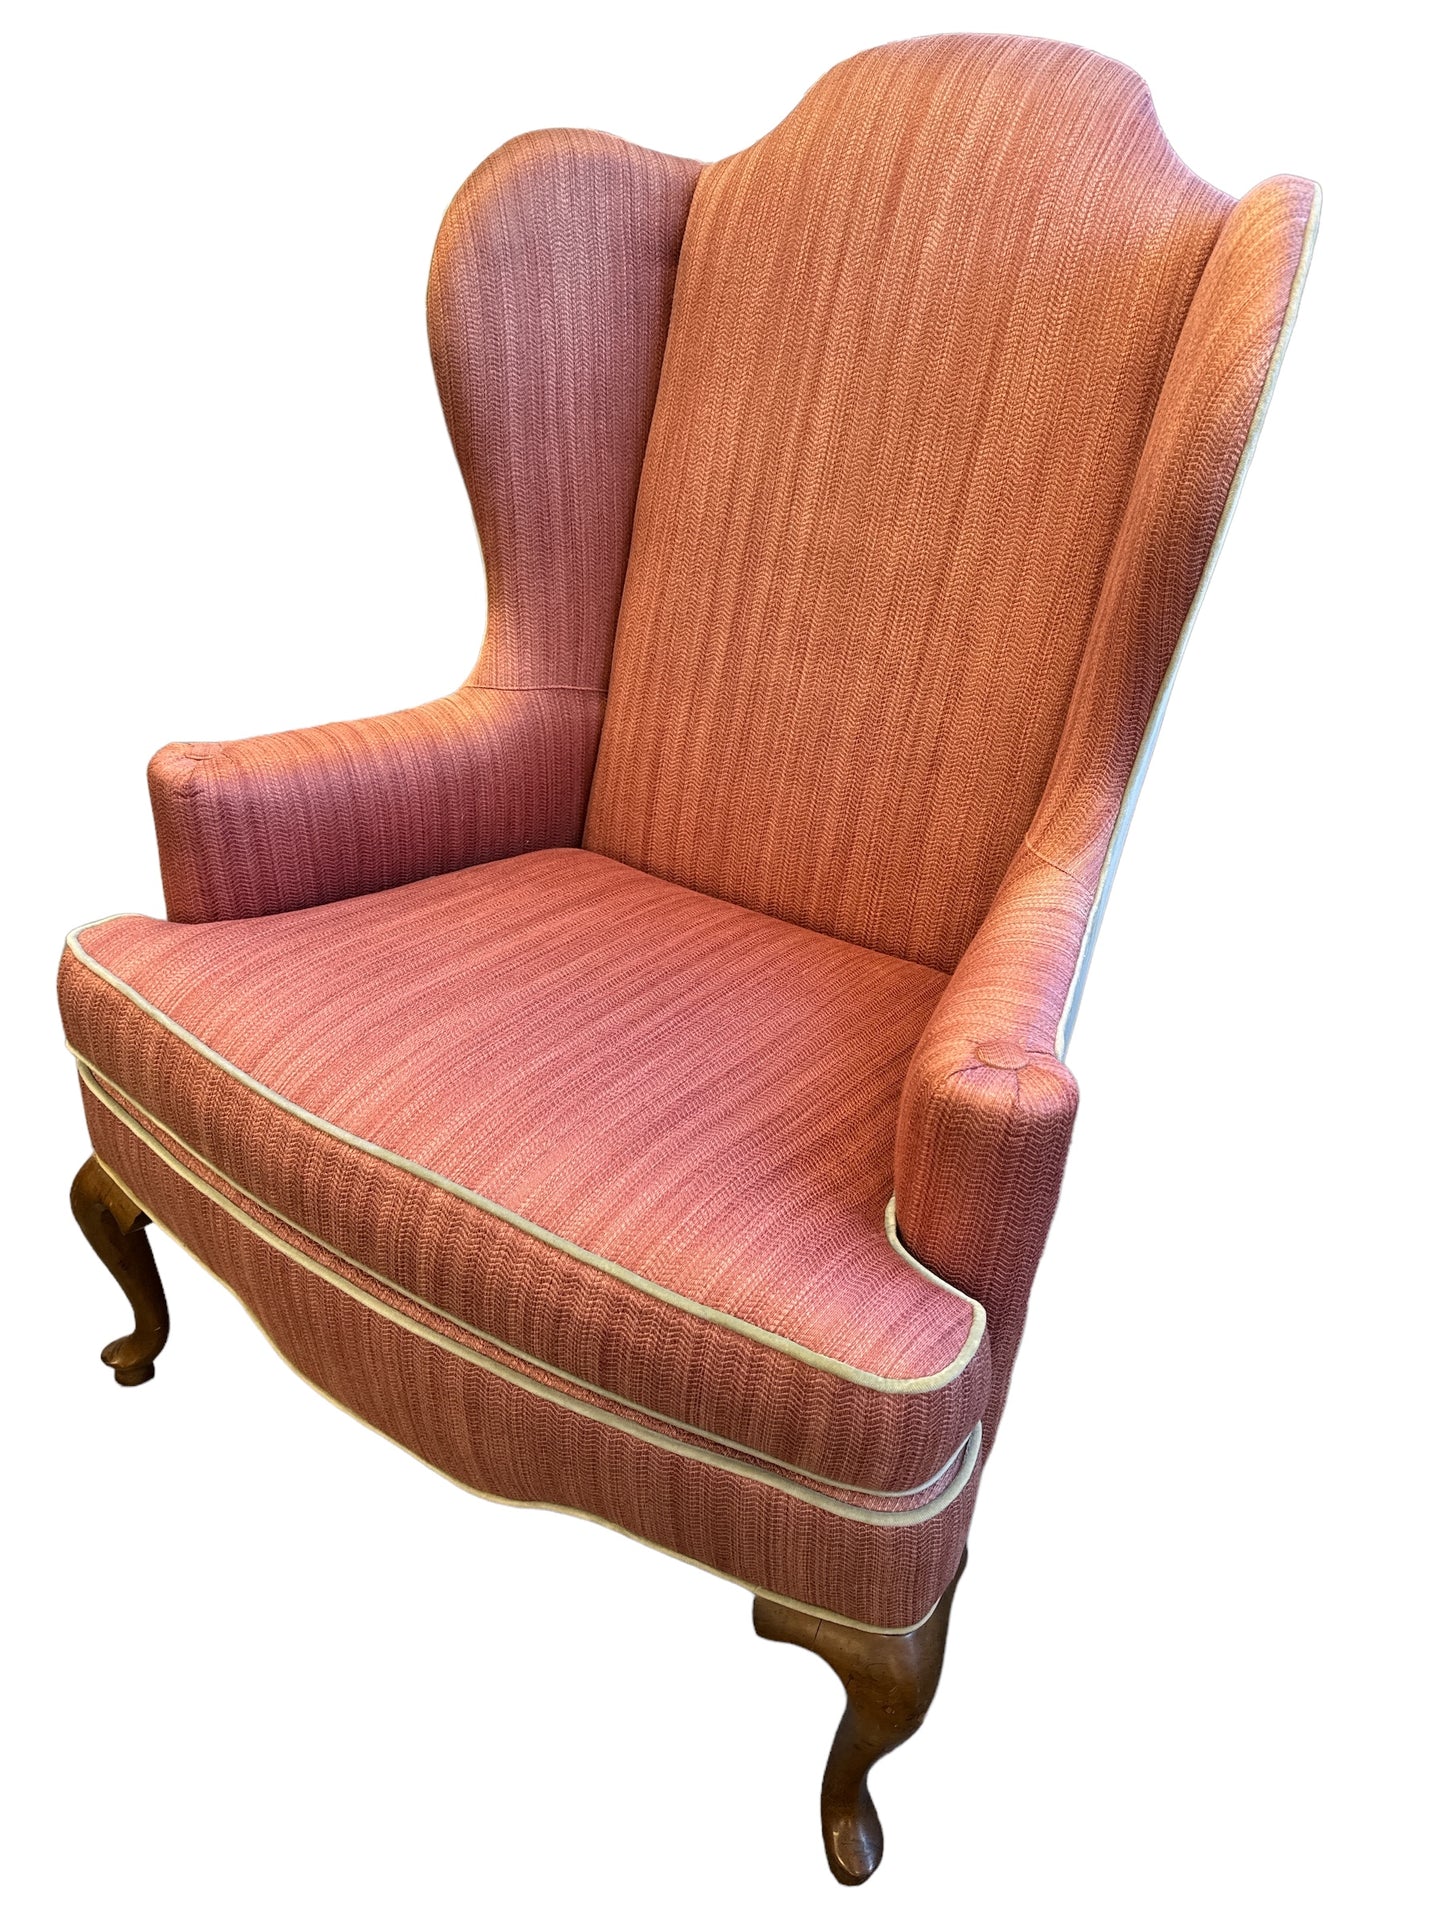 PAIR-Drexel-Heritage Wingback Chairs (Mauve, Velvet Back), 46x29x33"